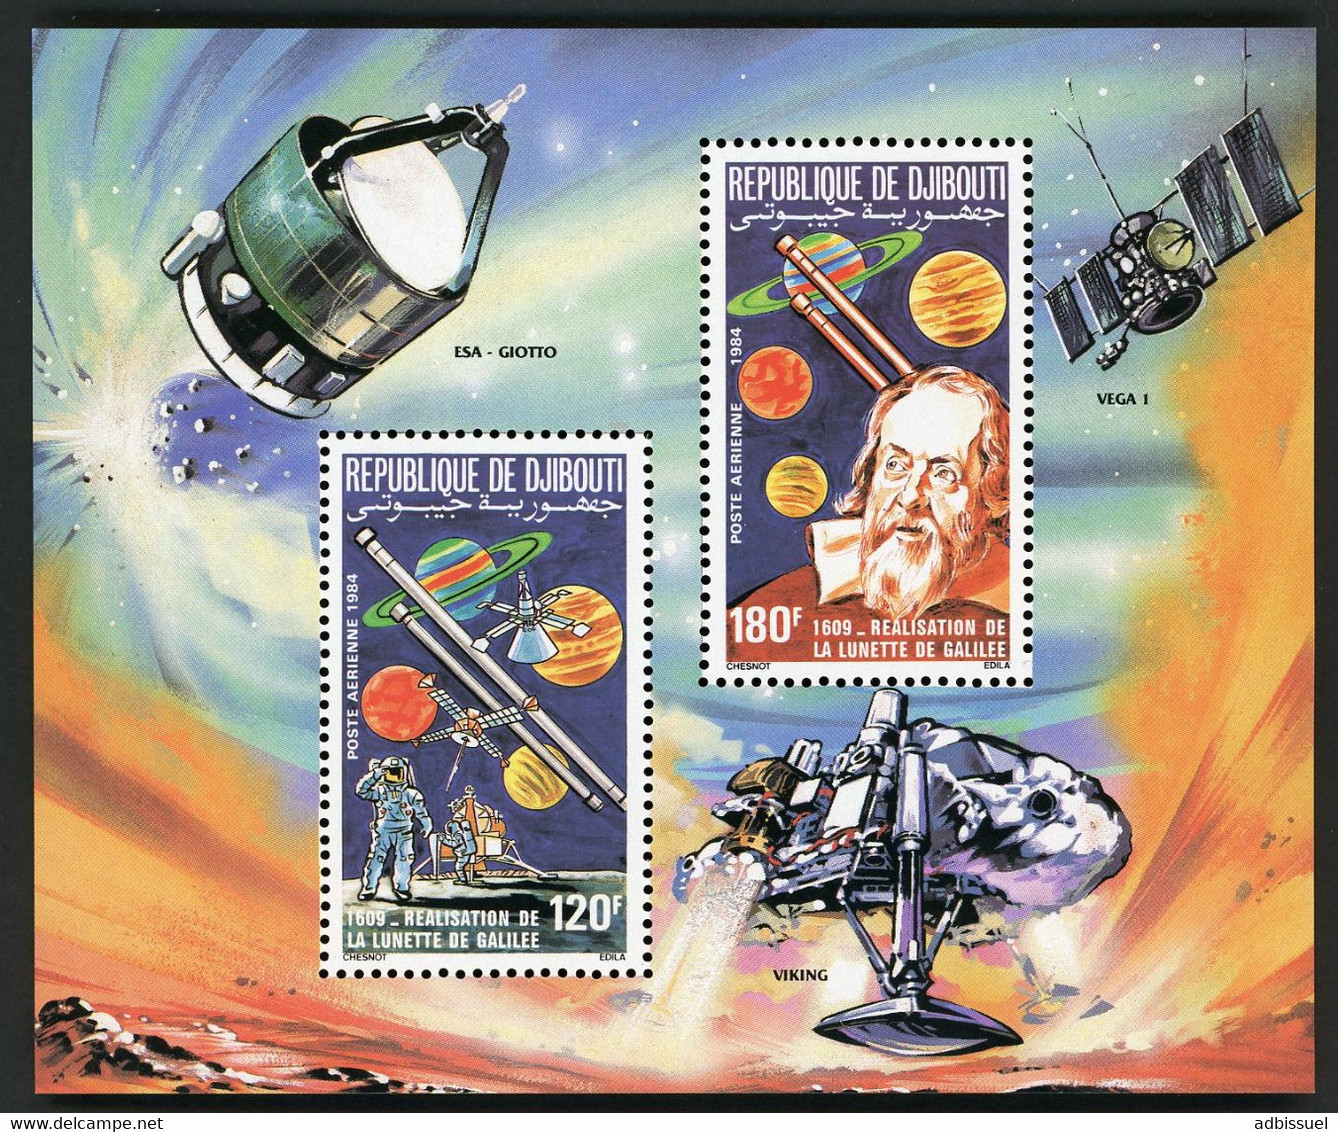 DJIBOUTI Bloc Spécial COTE 32 € Poste Aérienne N° 213 + 214 MNH ** Lunette De Galilée, Galileo's Telescope. TB/VG - Djibouti (1977-...)